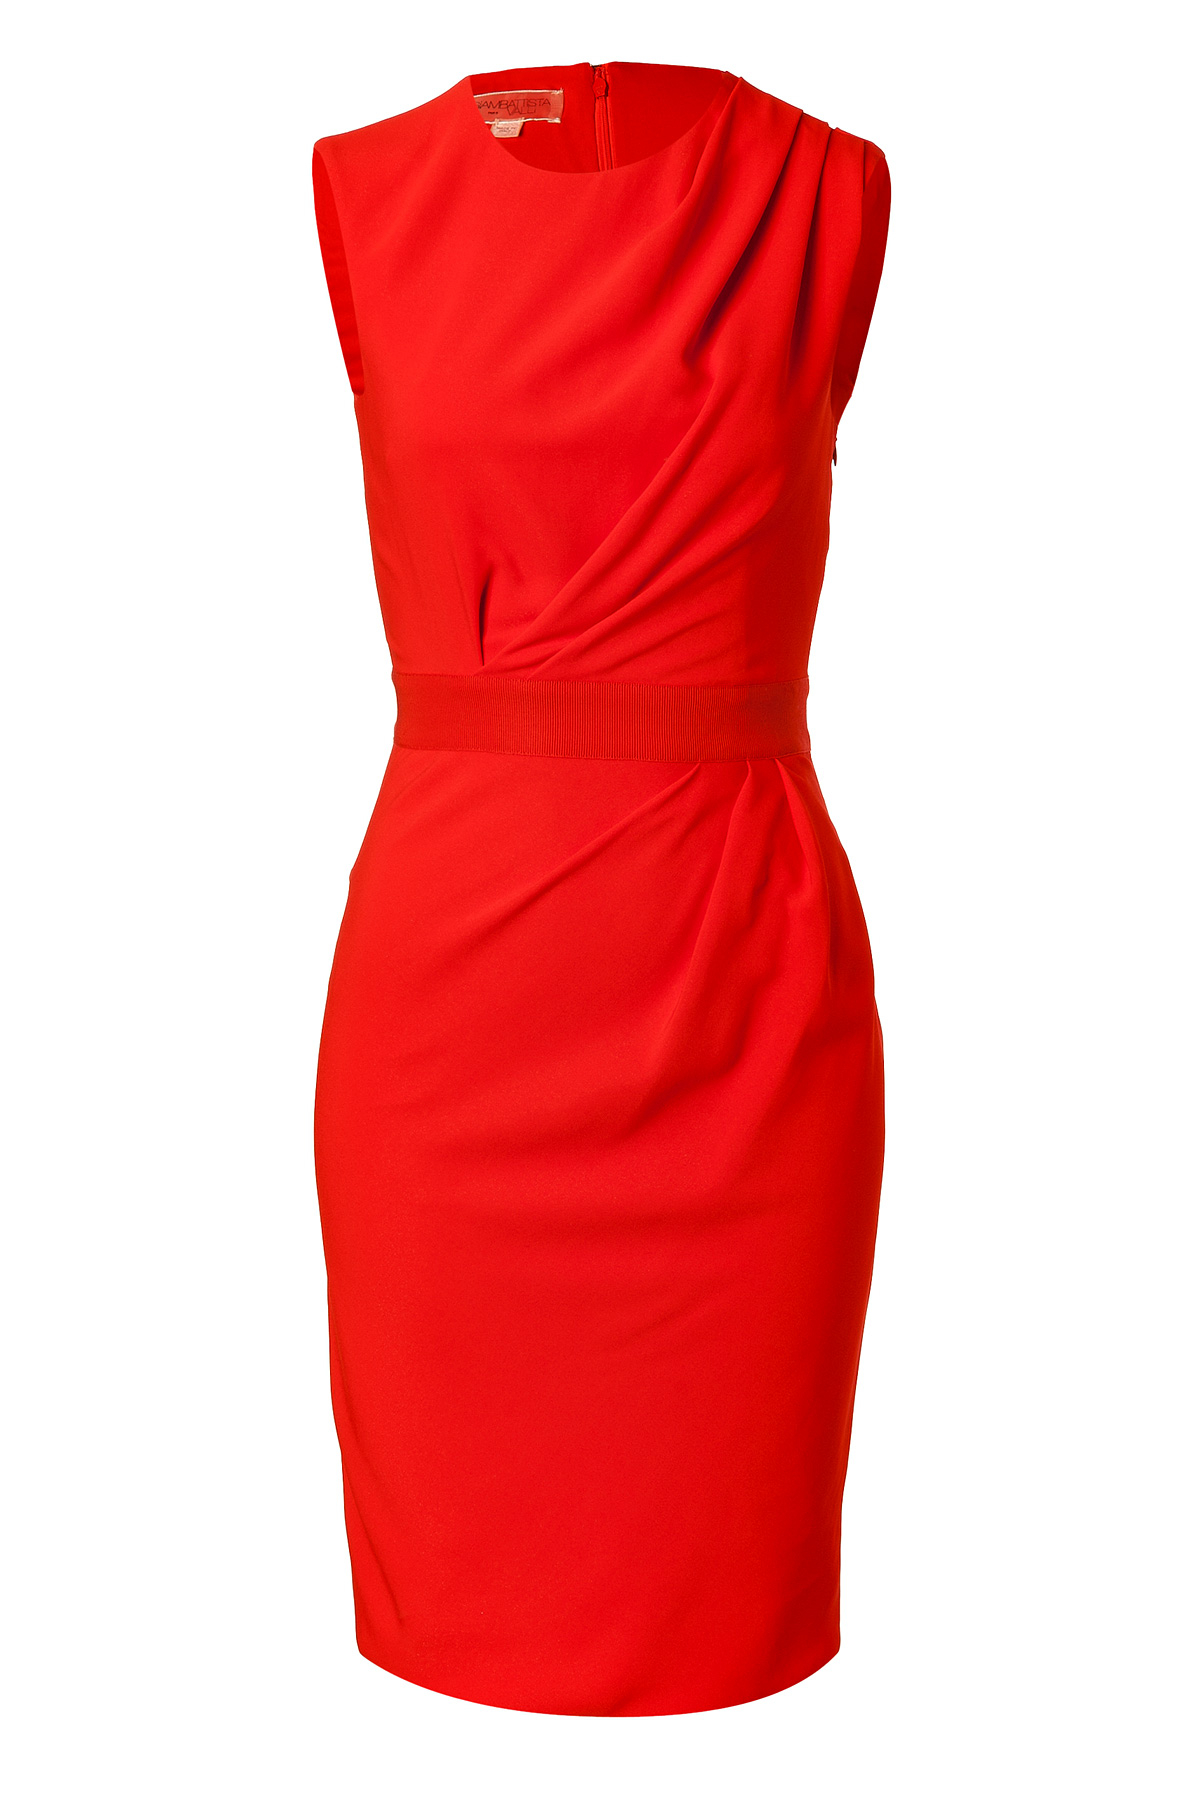 Giambattista valli Draped Sheath Dress - Red in Red | Lyst